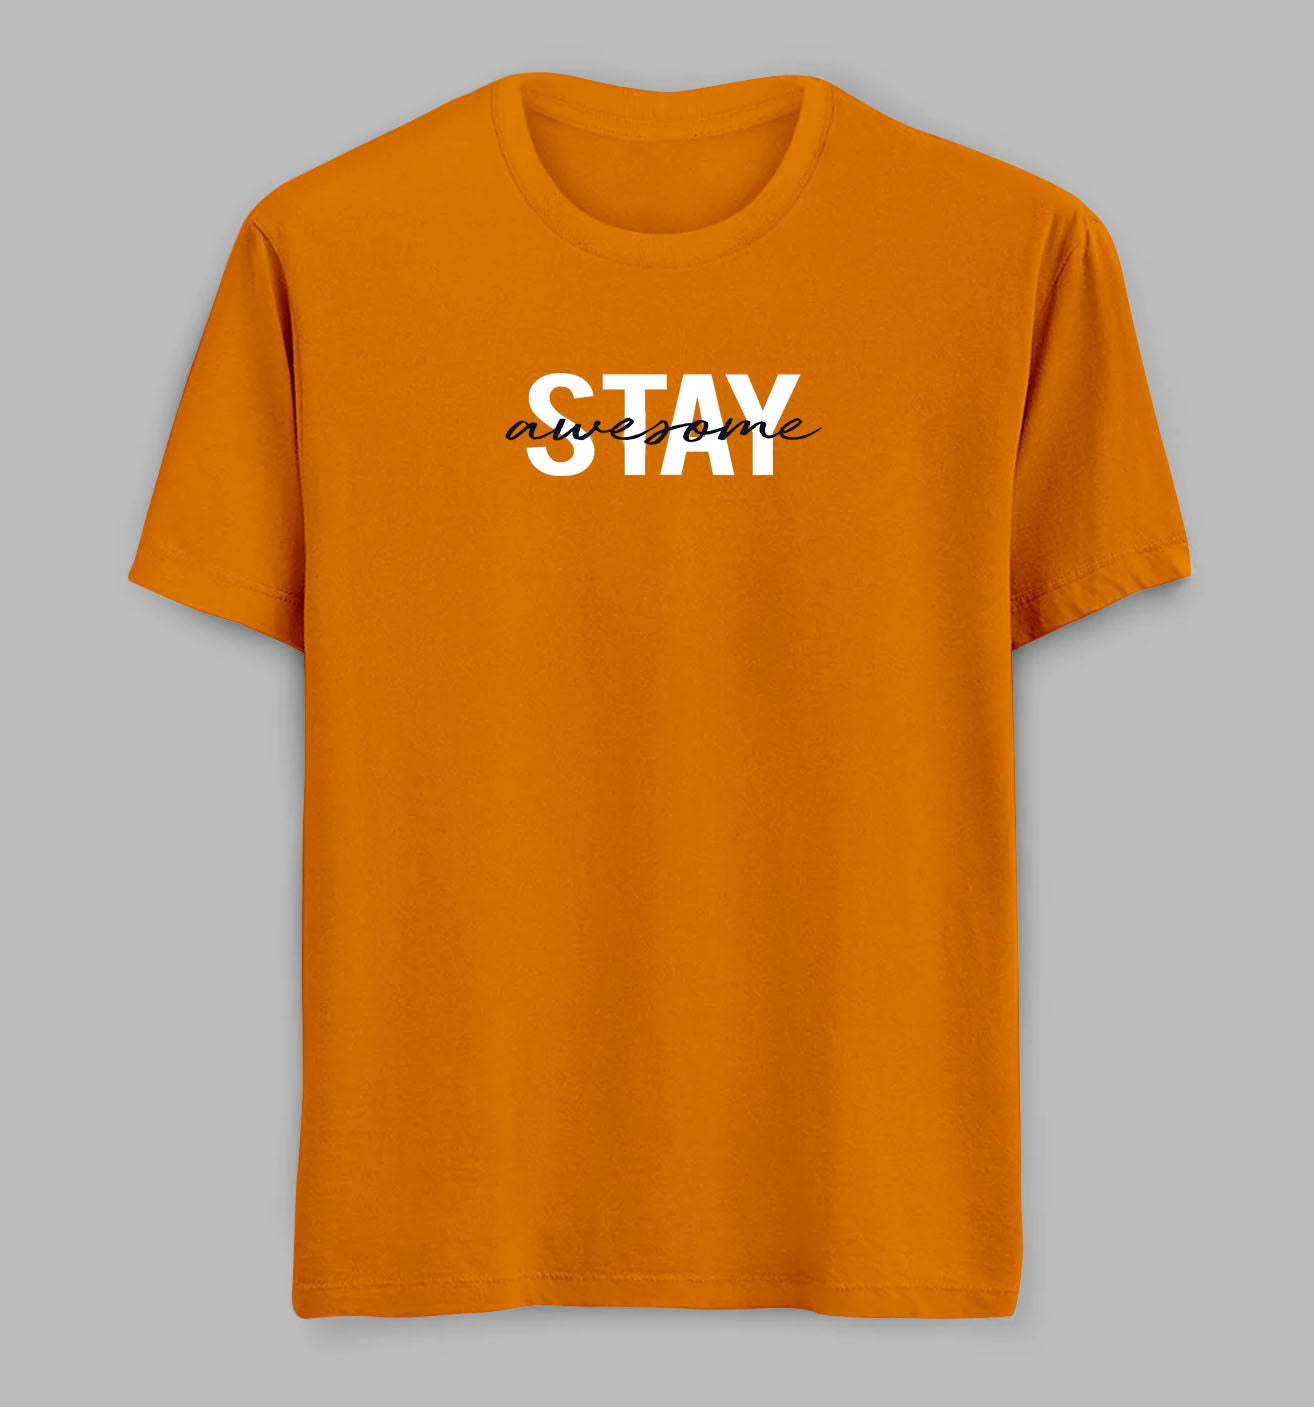 Stay Awesome Tees/ Tshirts